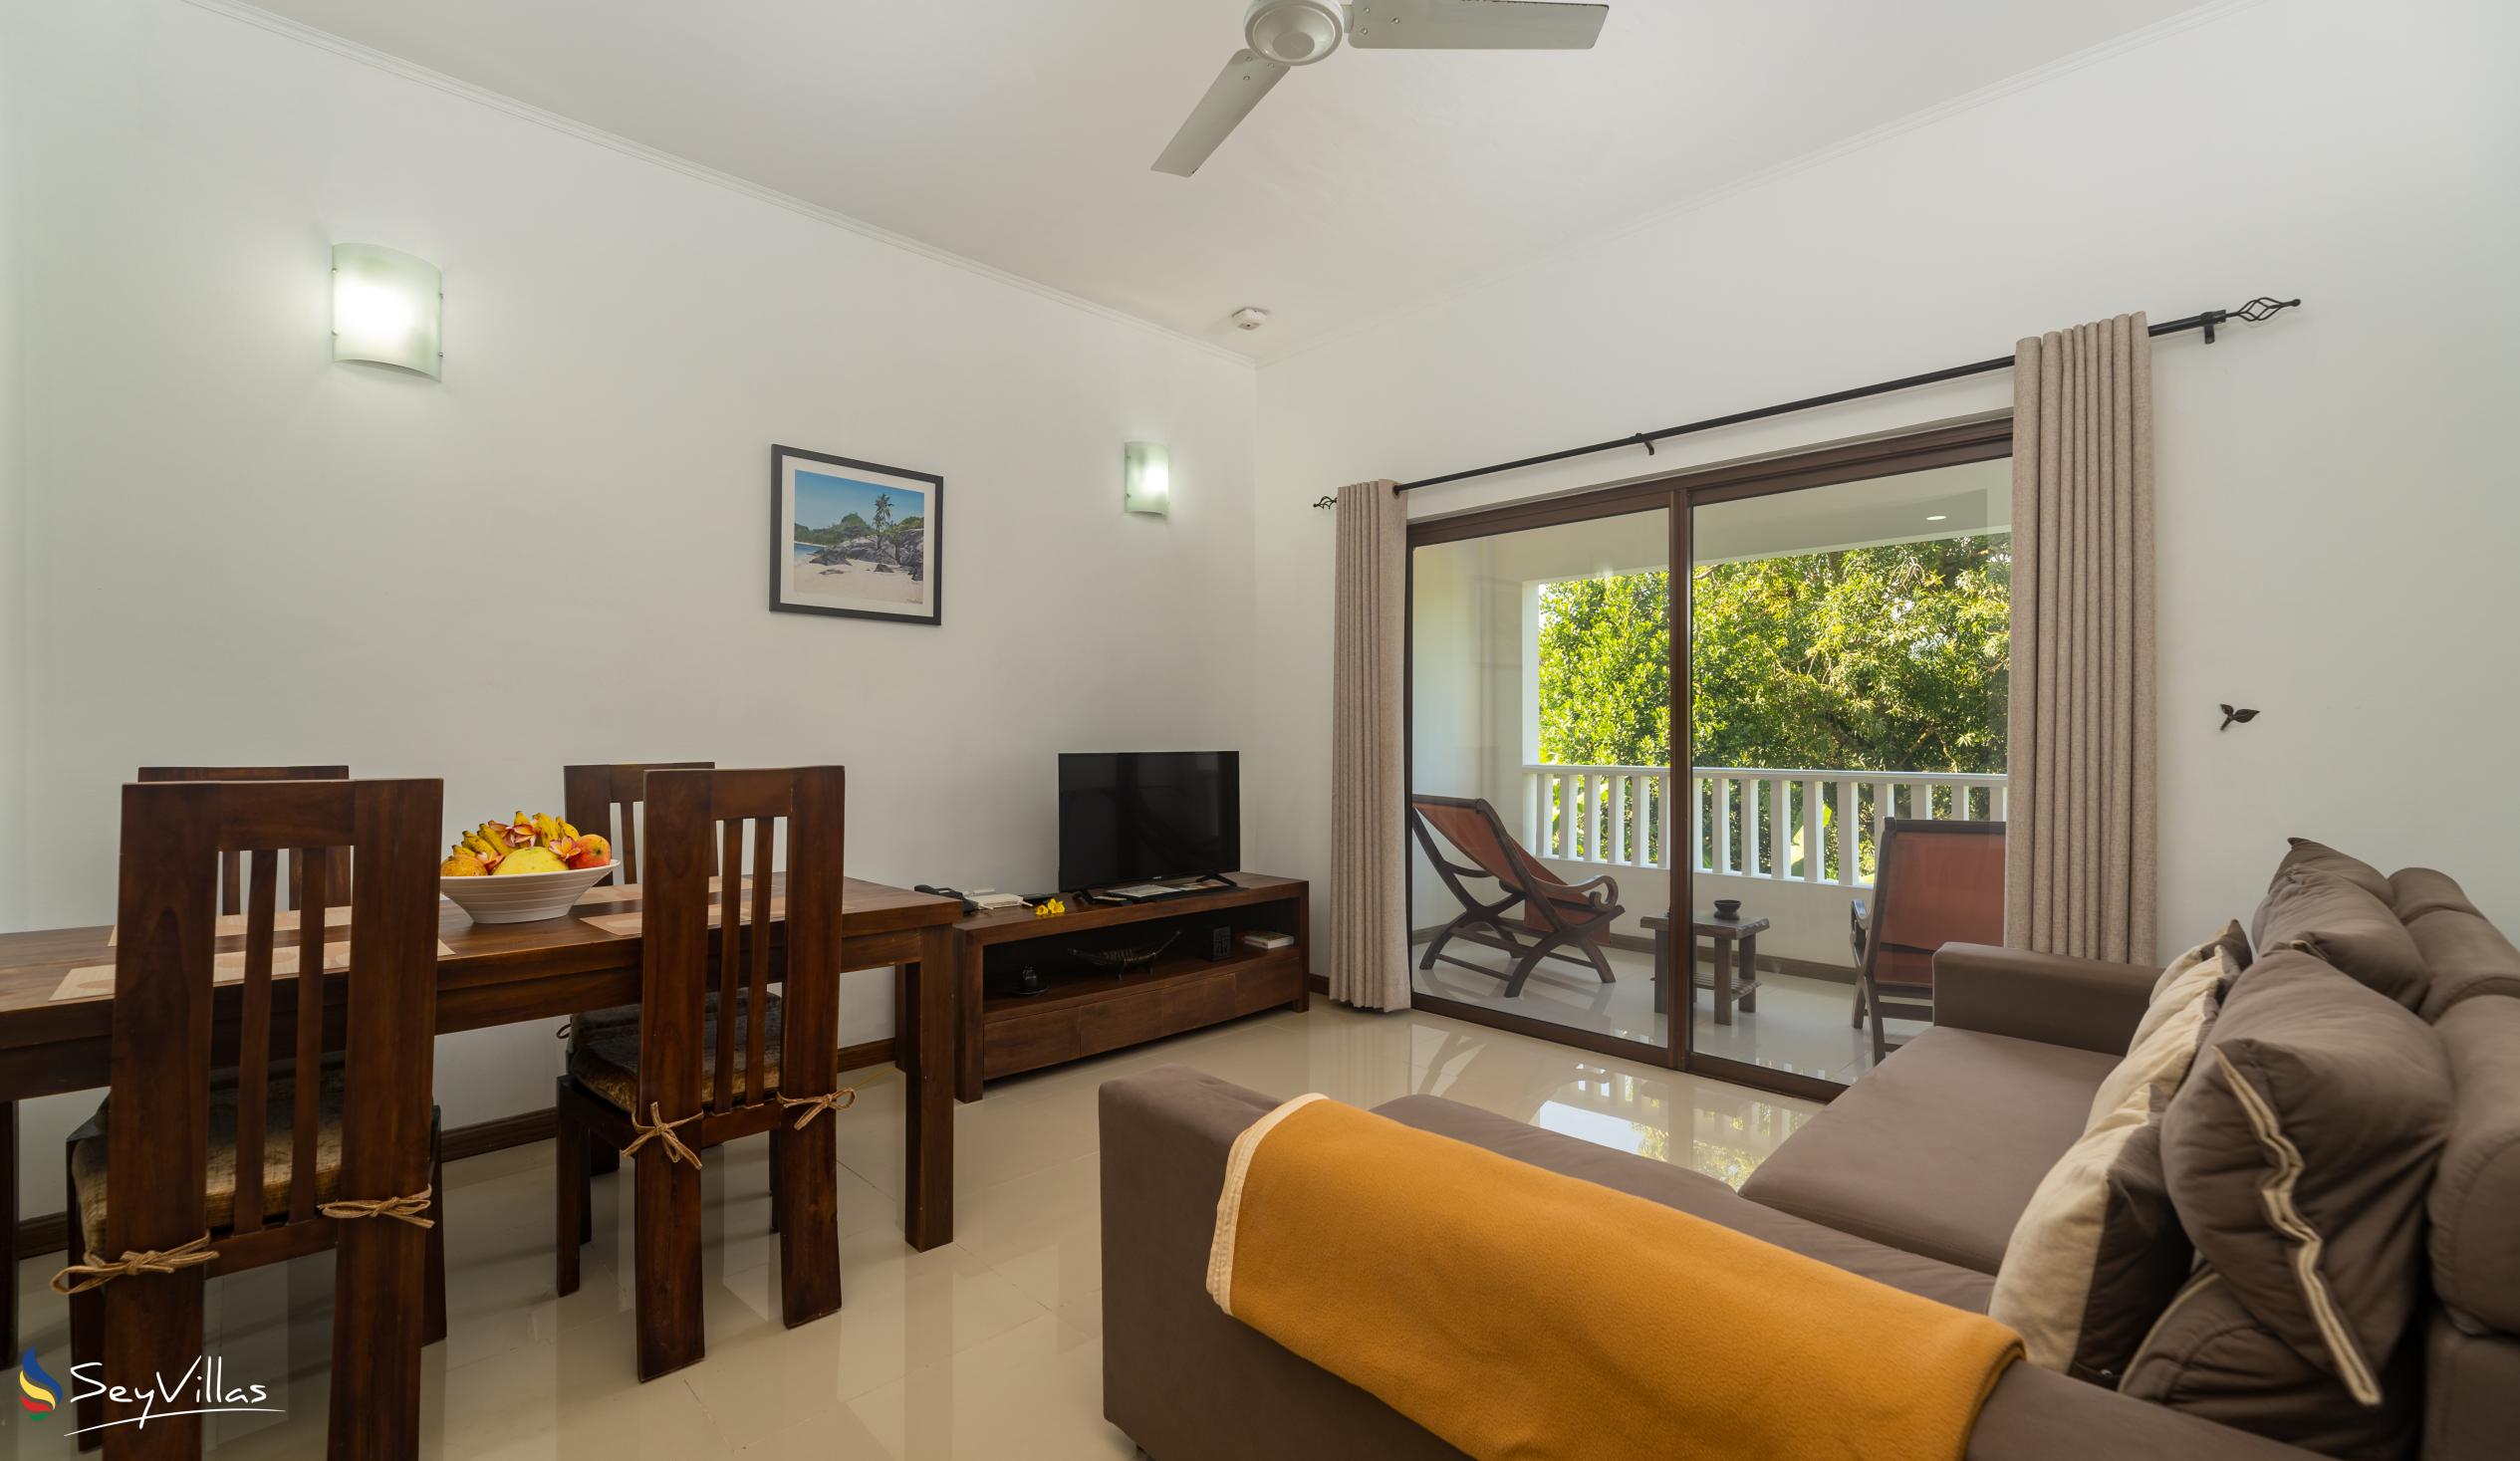 Foto 15: Kanasuk Self Catering Apartments - Appartamento Cinnamon con 2 camere - Mahé (Seychelles)